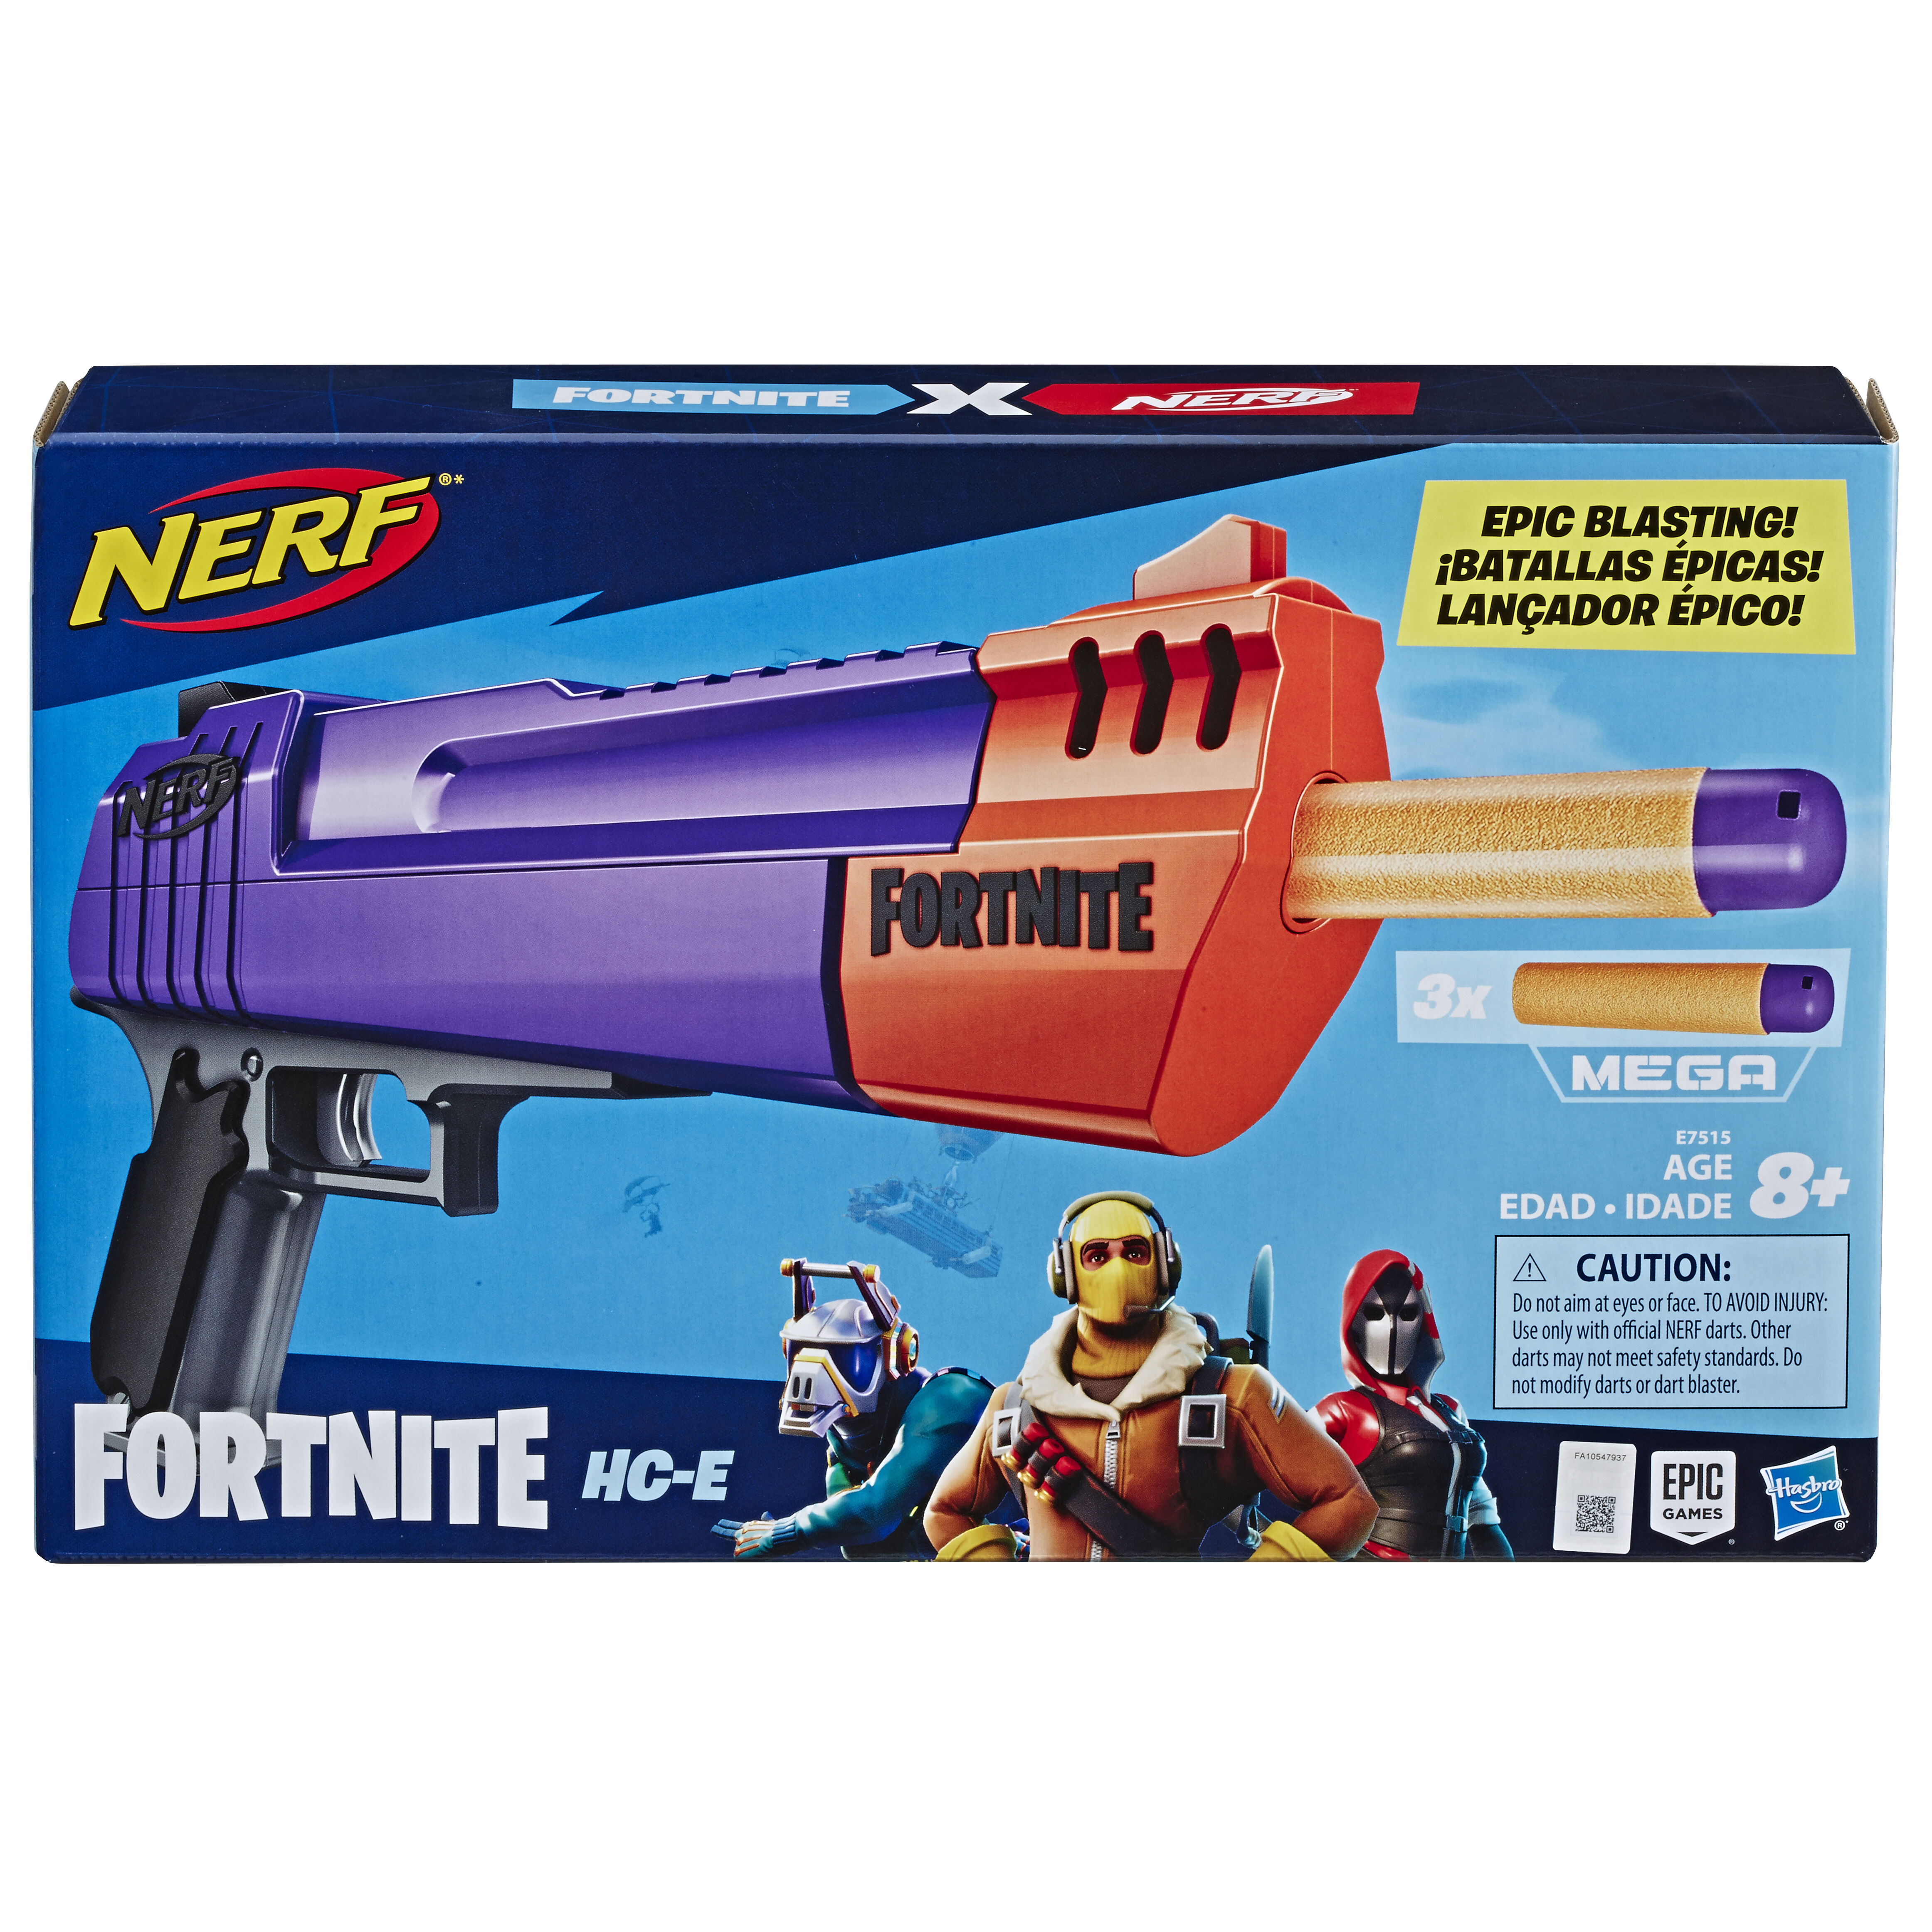 Blaster Nerf Fortnite HC E